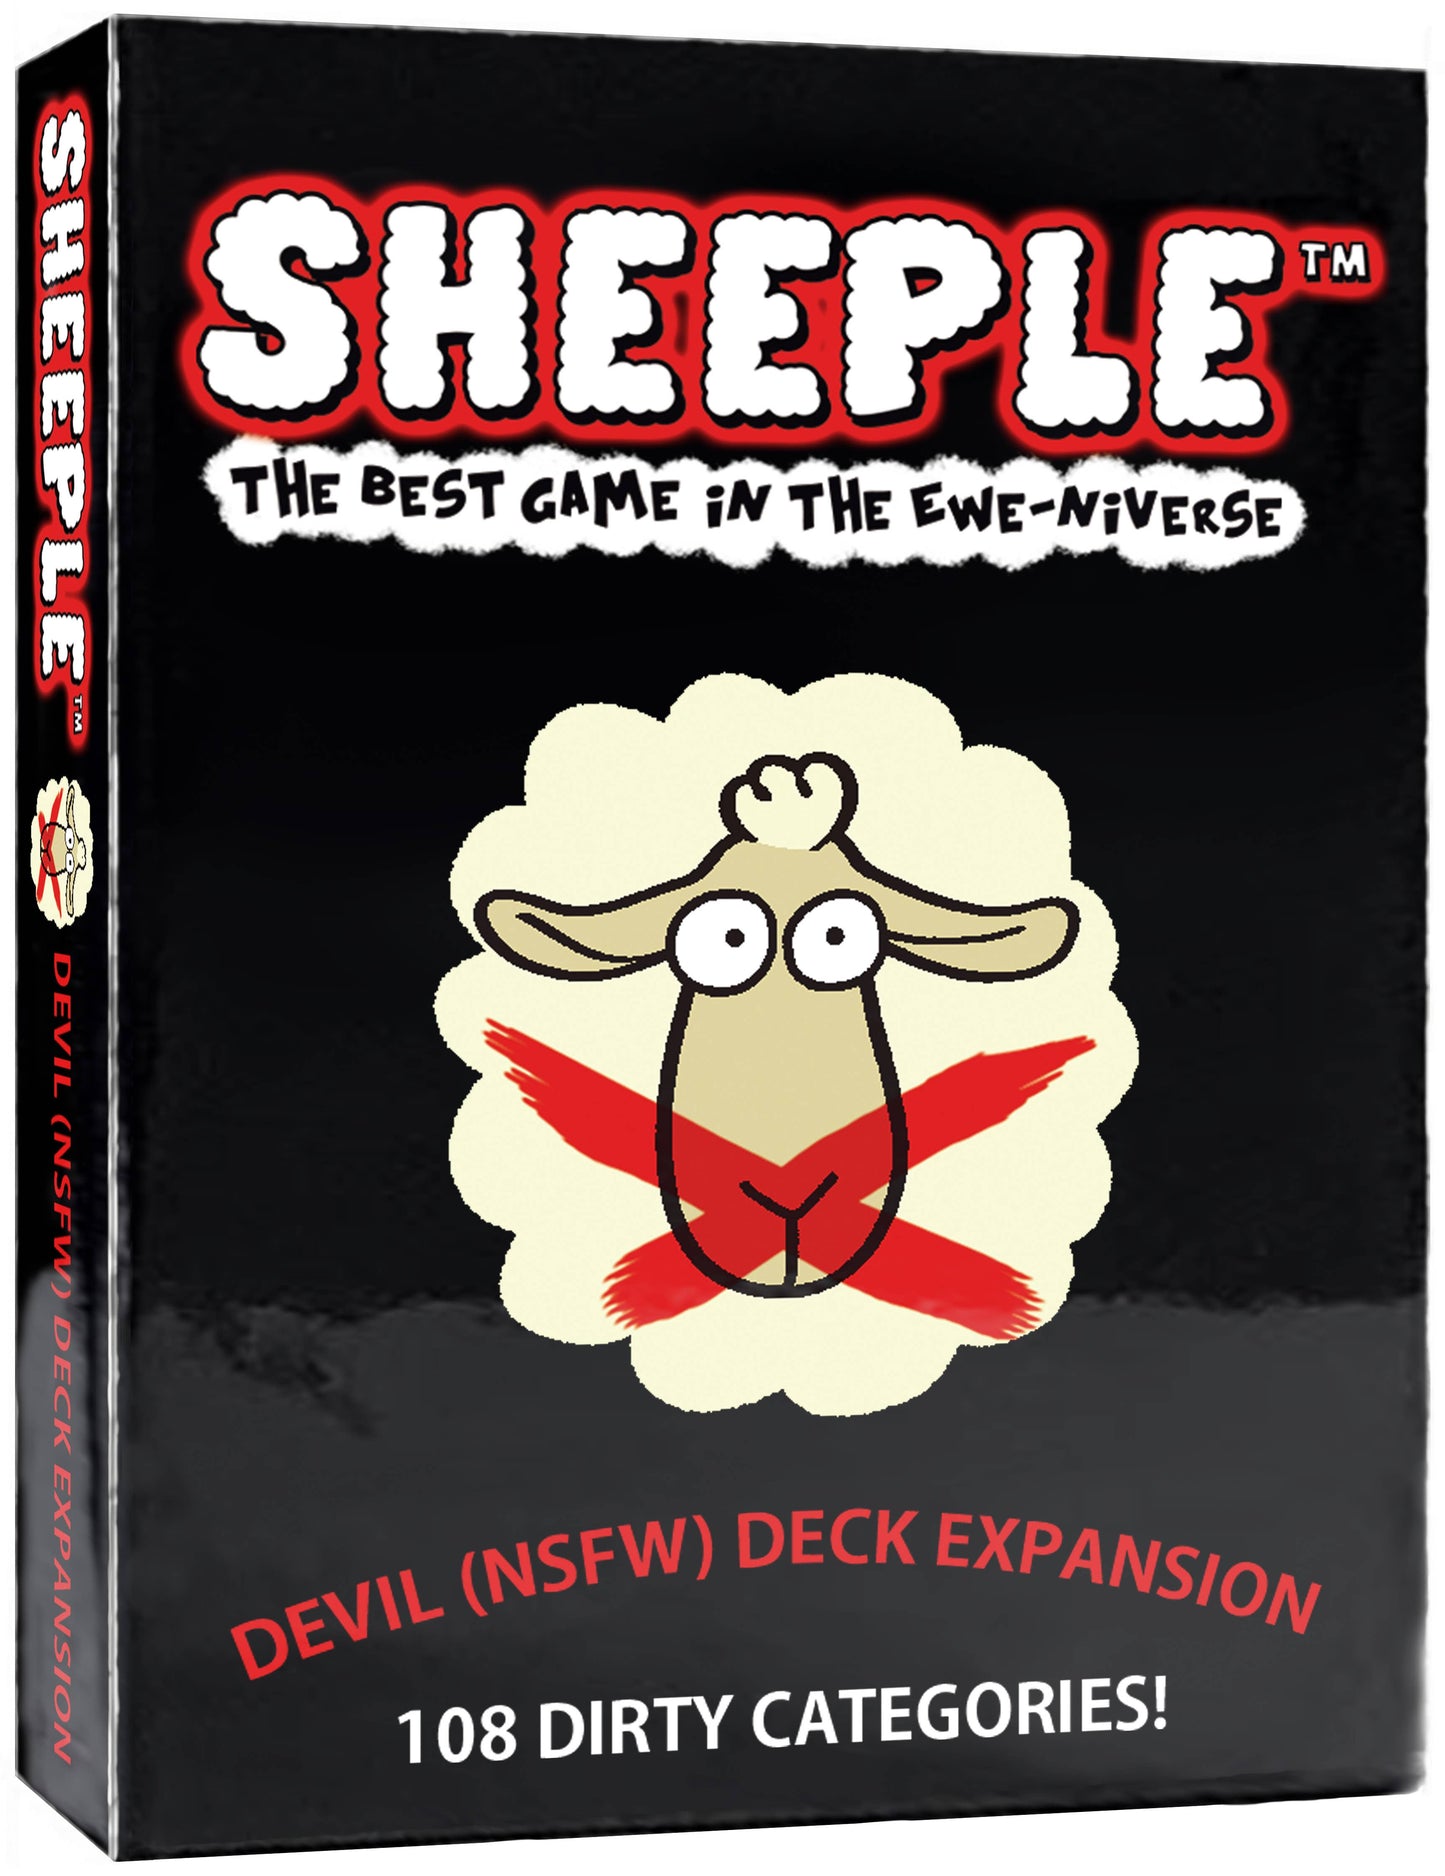 Sheeple Devil NSFW Deck